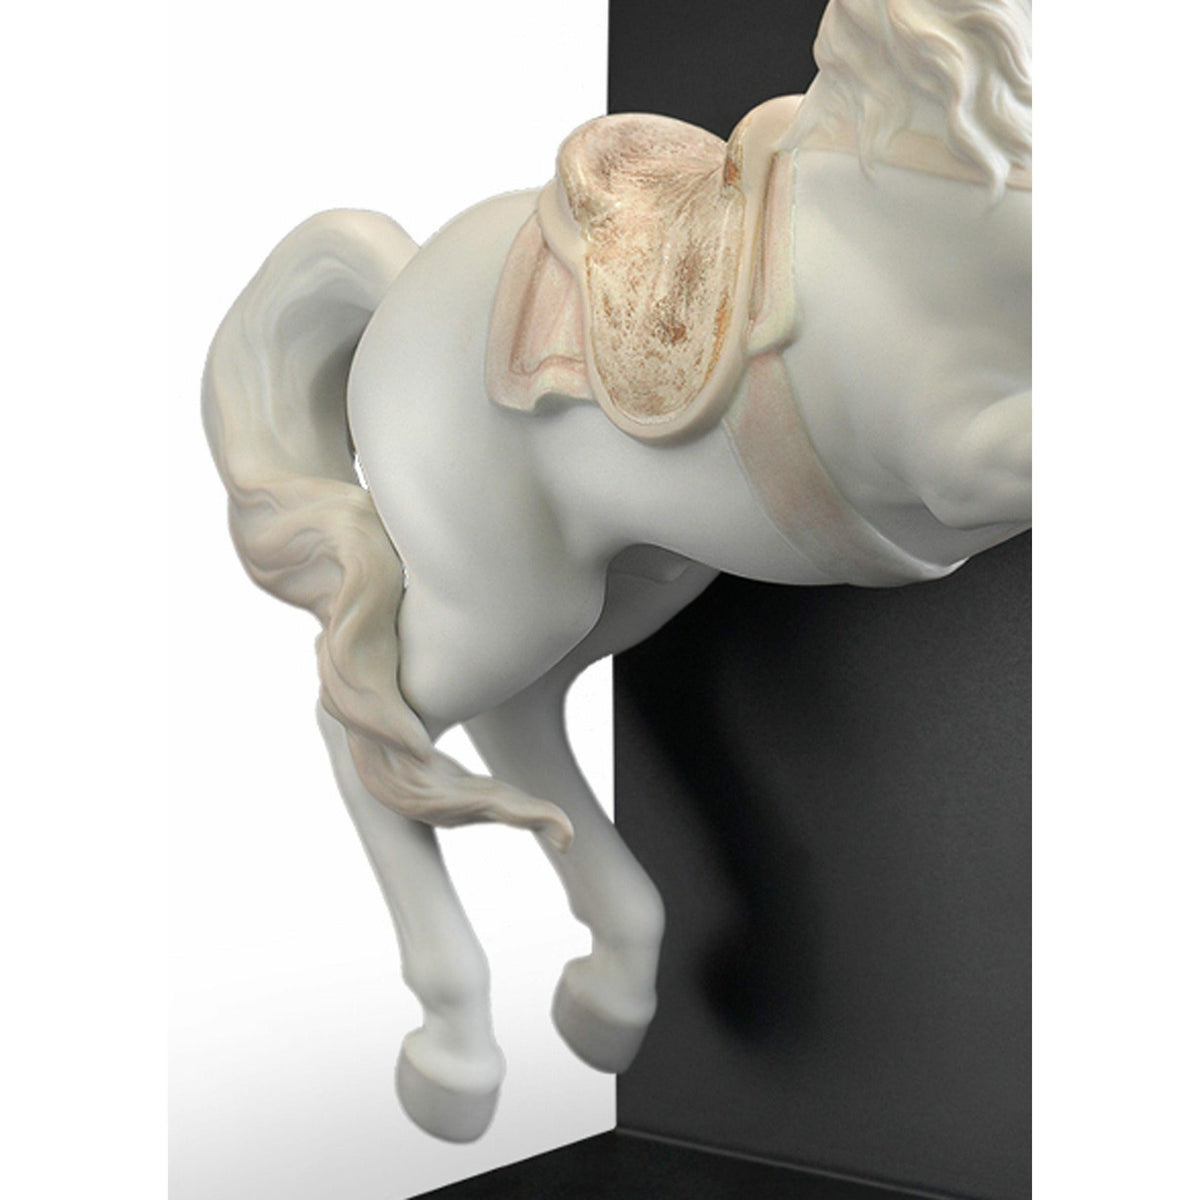 Lladro - Horse on Courbette Table Lamp - 01023066 | Montreal Lighting & Hardware